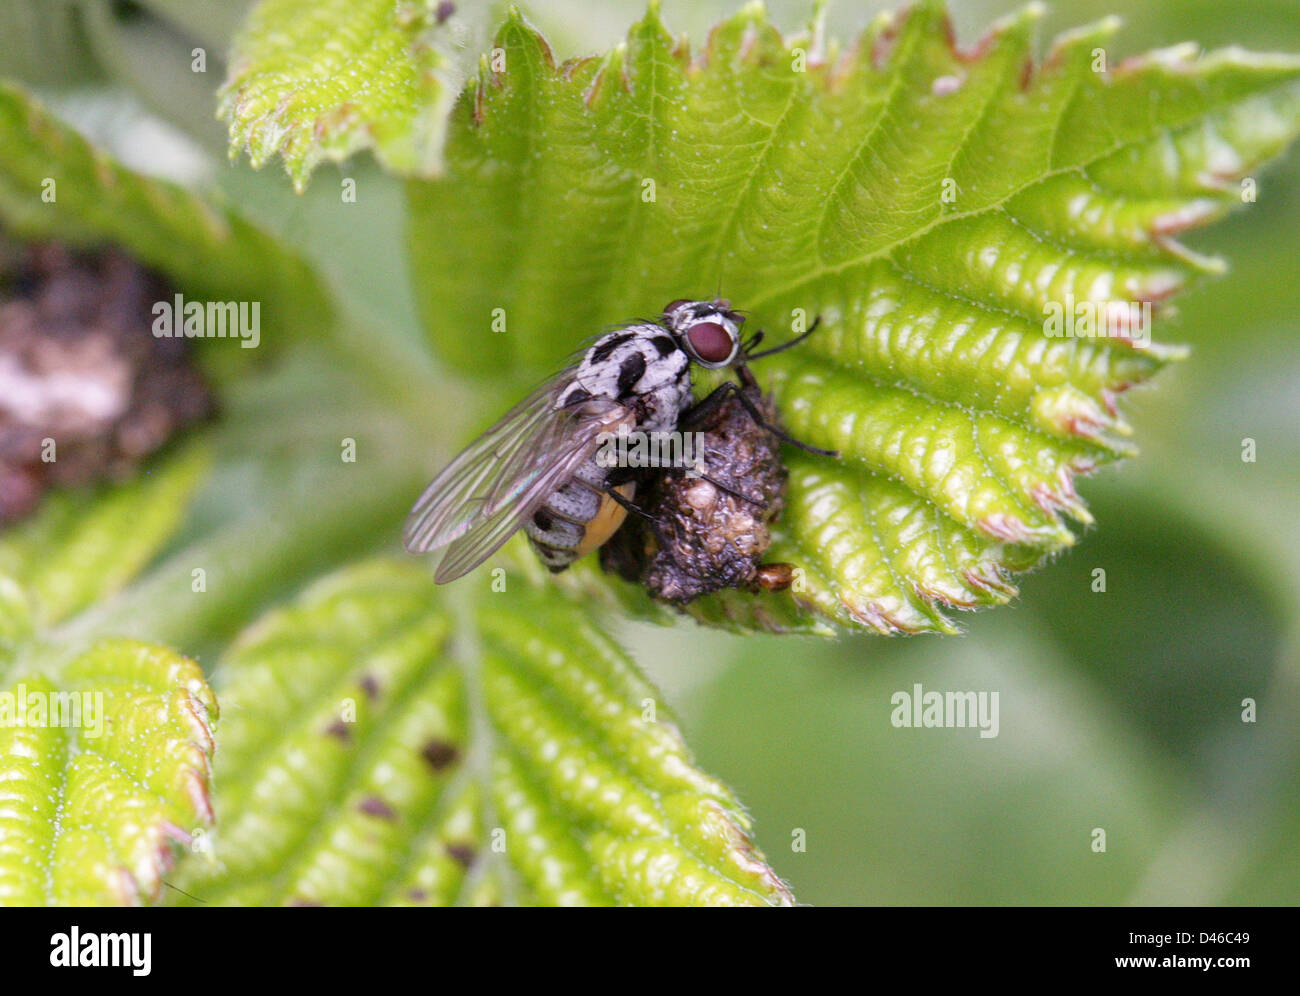 Rain Fly or Root-maggot Fly, Anthomyia procellaris, Anthomyiidae, Diptera. Female. Stock Photo